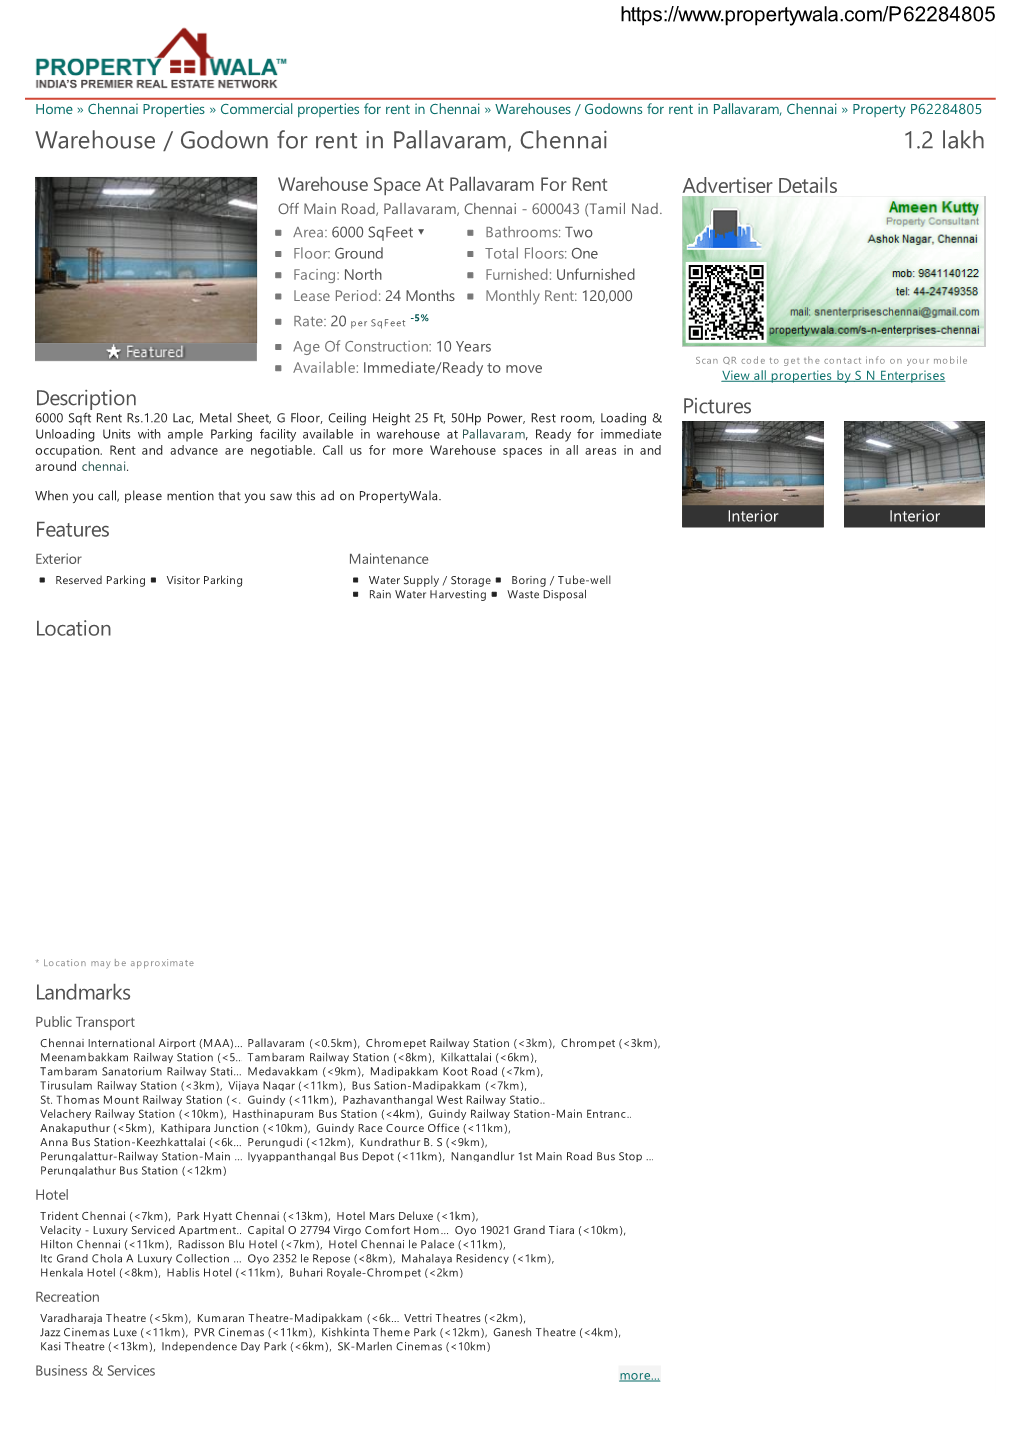 Warehouse / Godown for Rent in Pallavaram, Chennai (P62284805